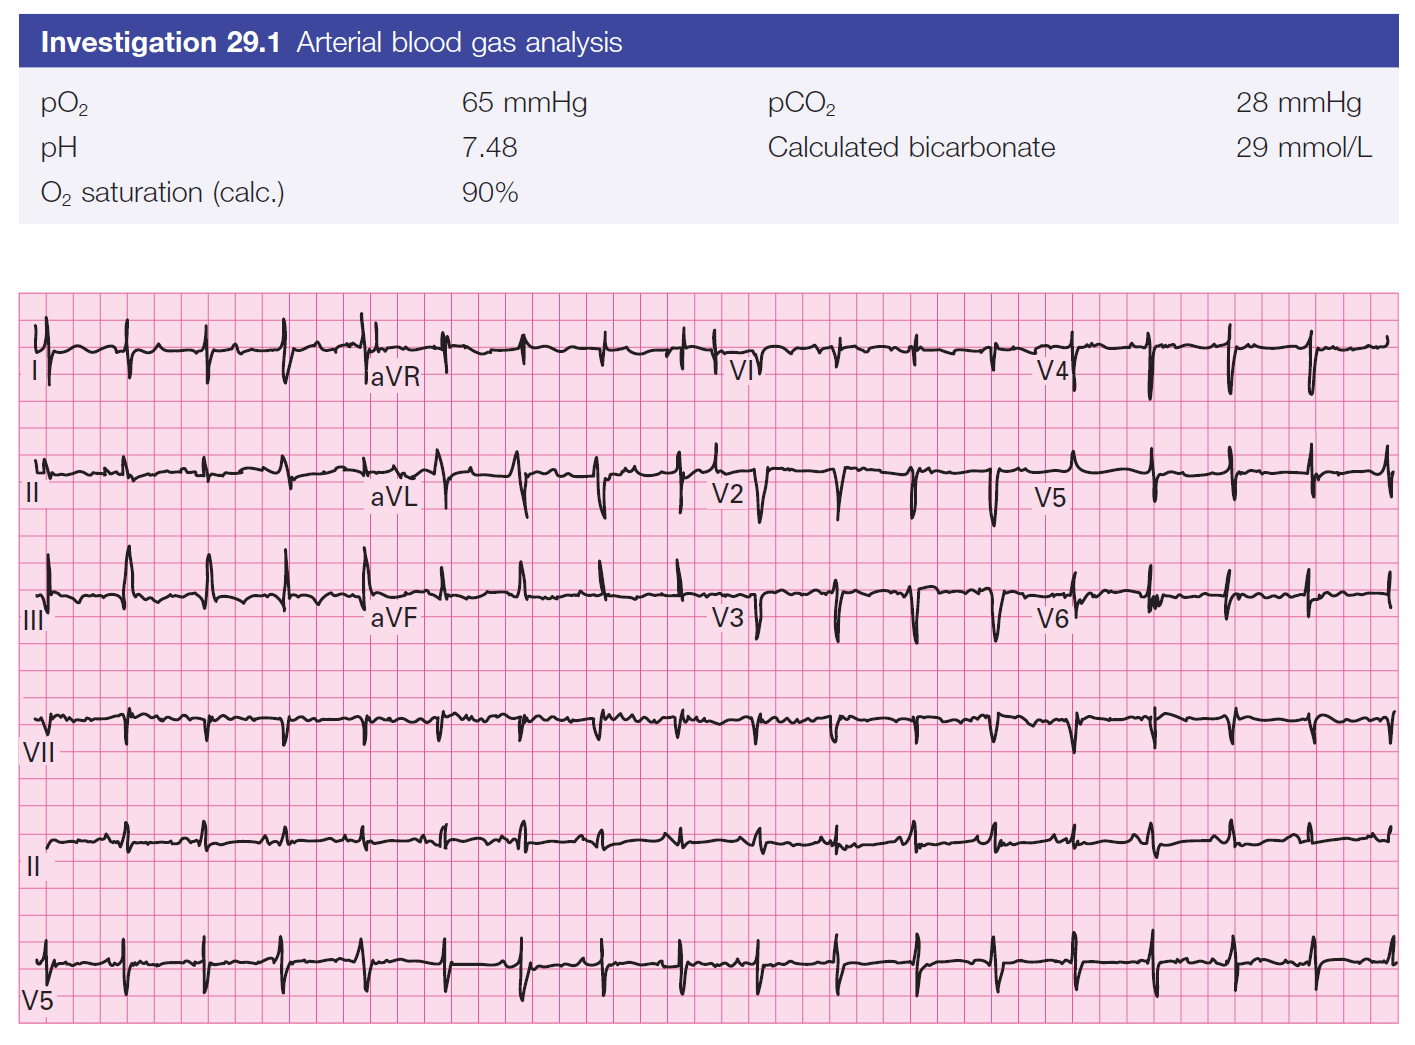 Figure 29.1 Electrocardiograph